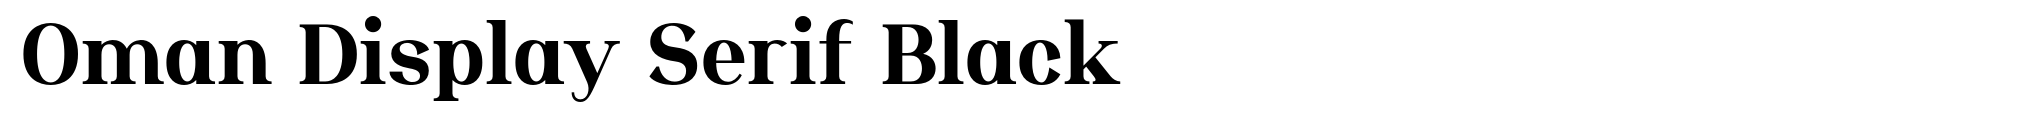 Oman Display Serif Black image